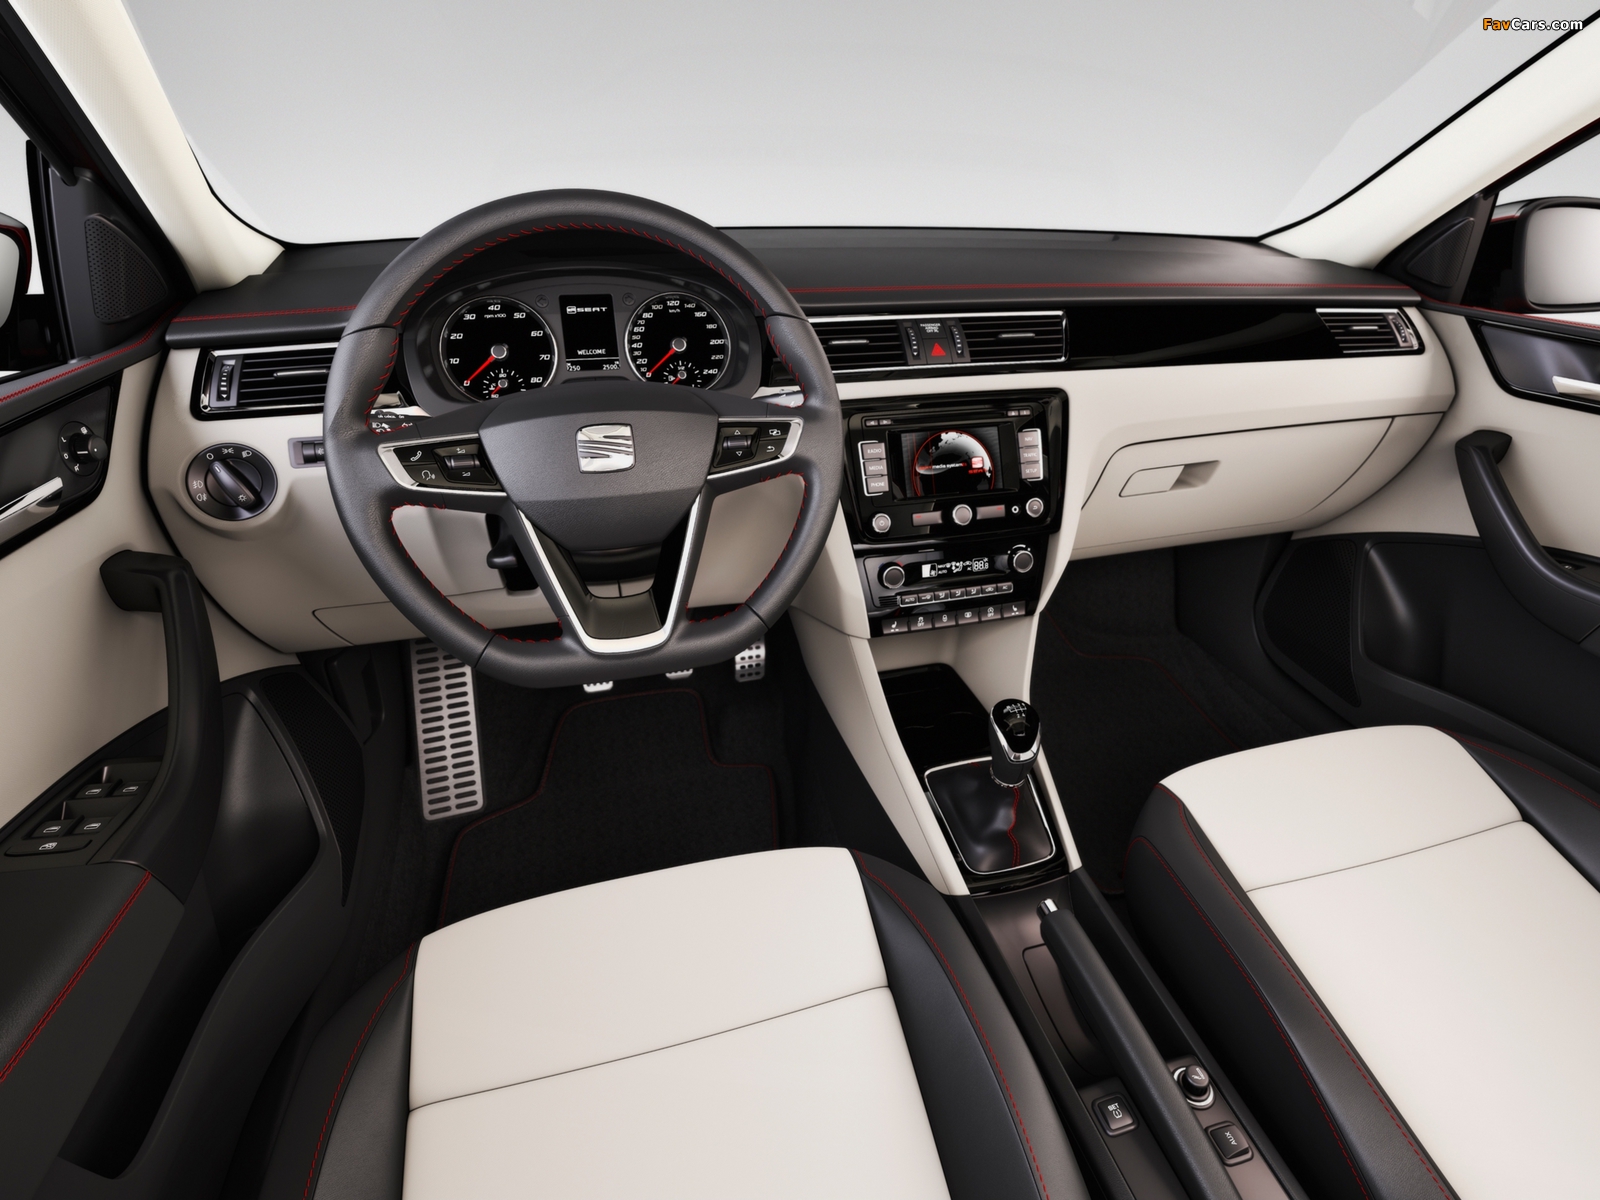 Seat Toledo Concept 2012 pictures (1600 x 1200)